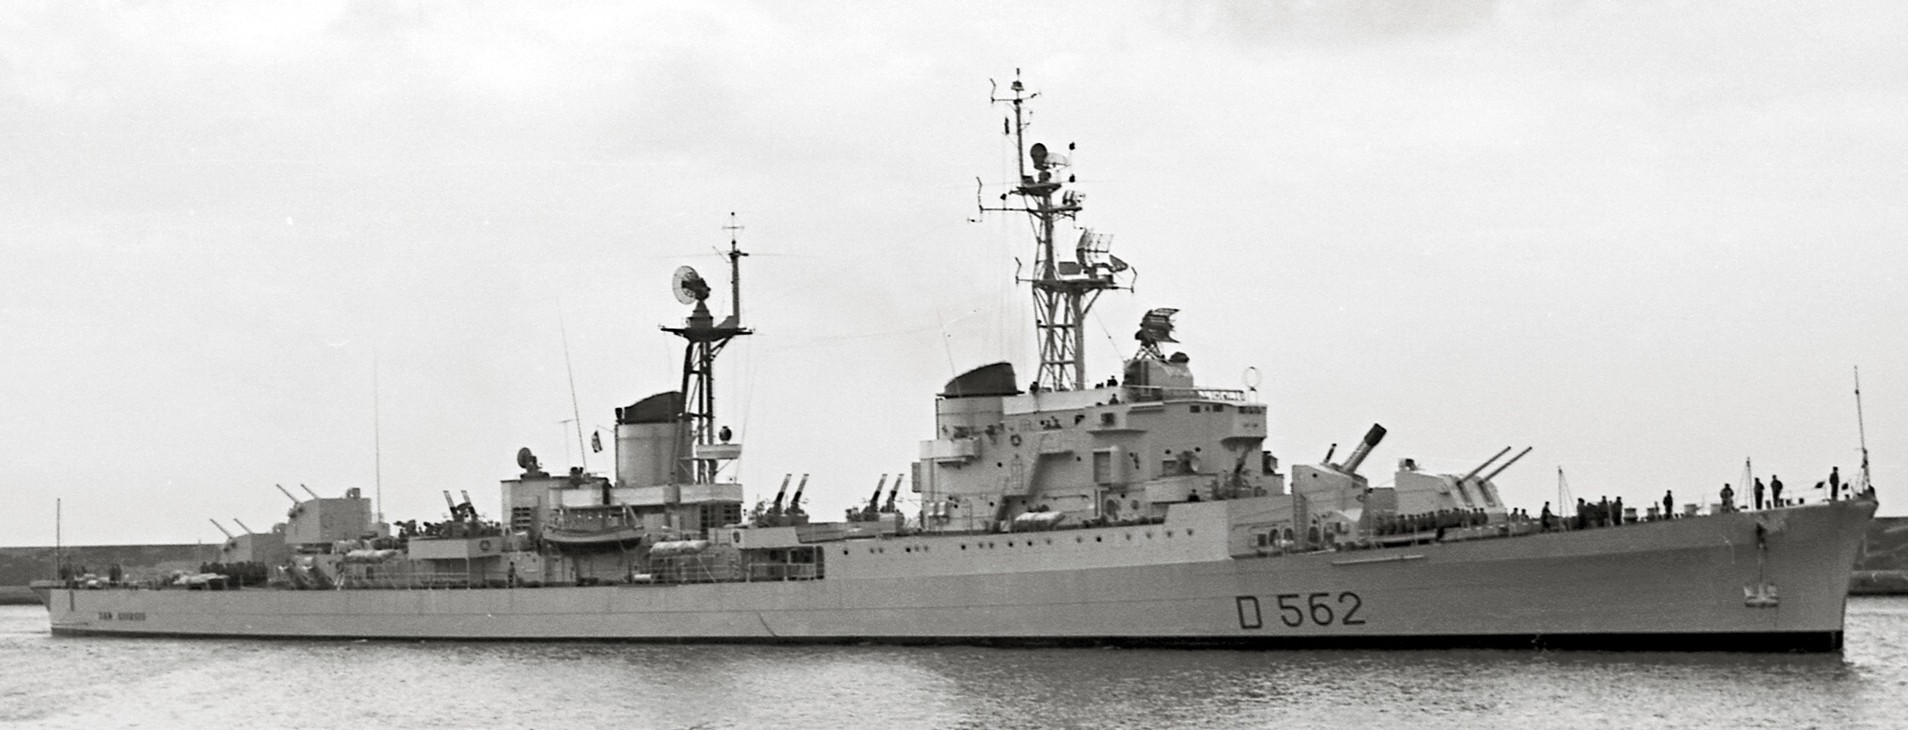 san giorgio class destroyer italian navy marina militare capitani romani cruiser 08x